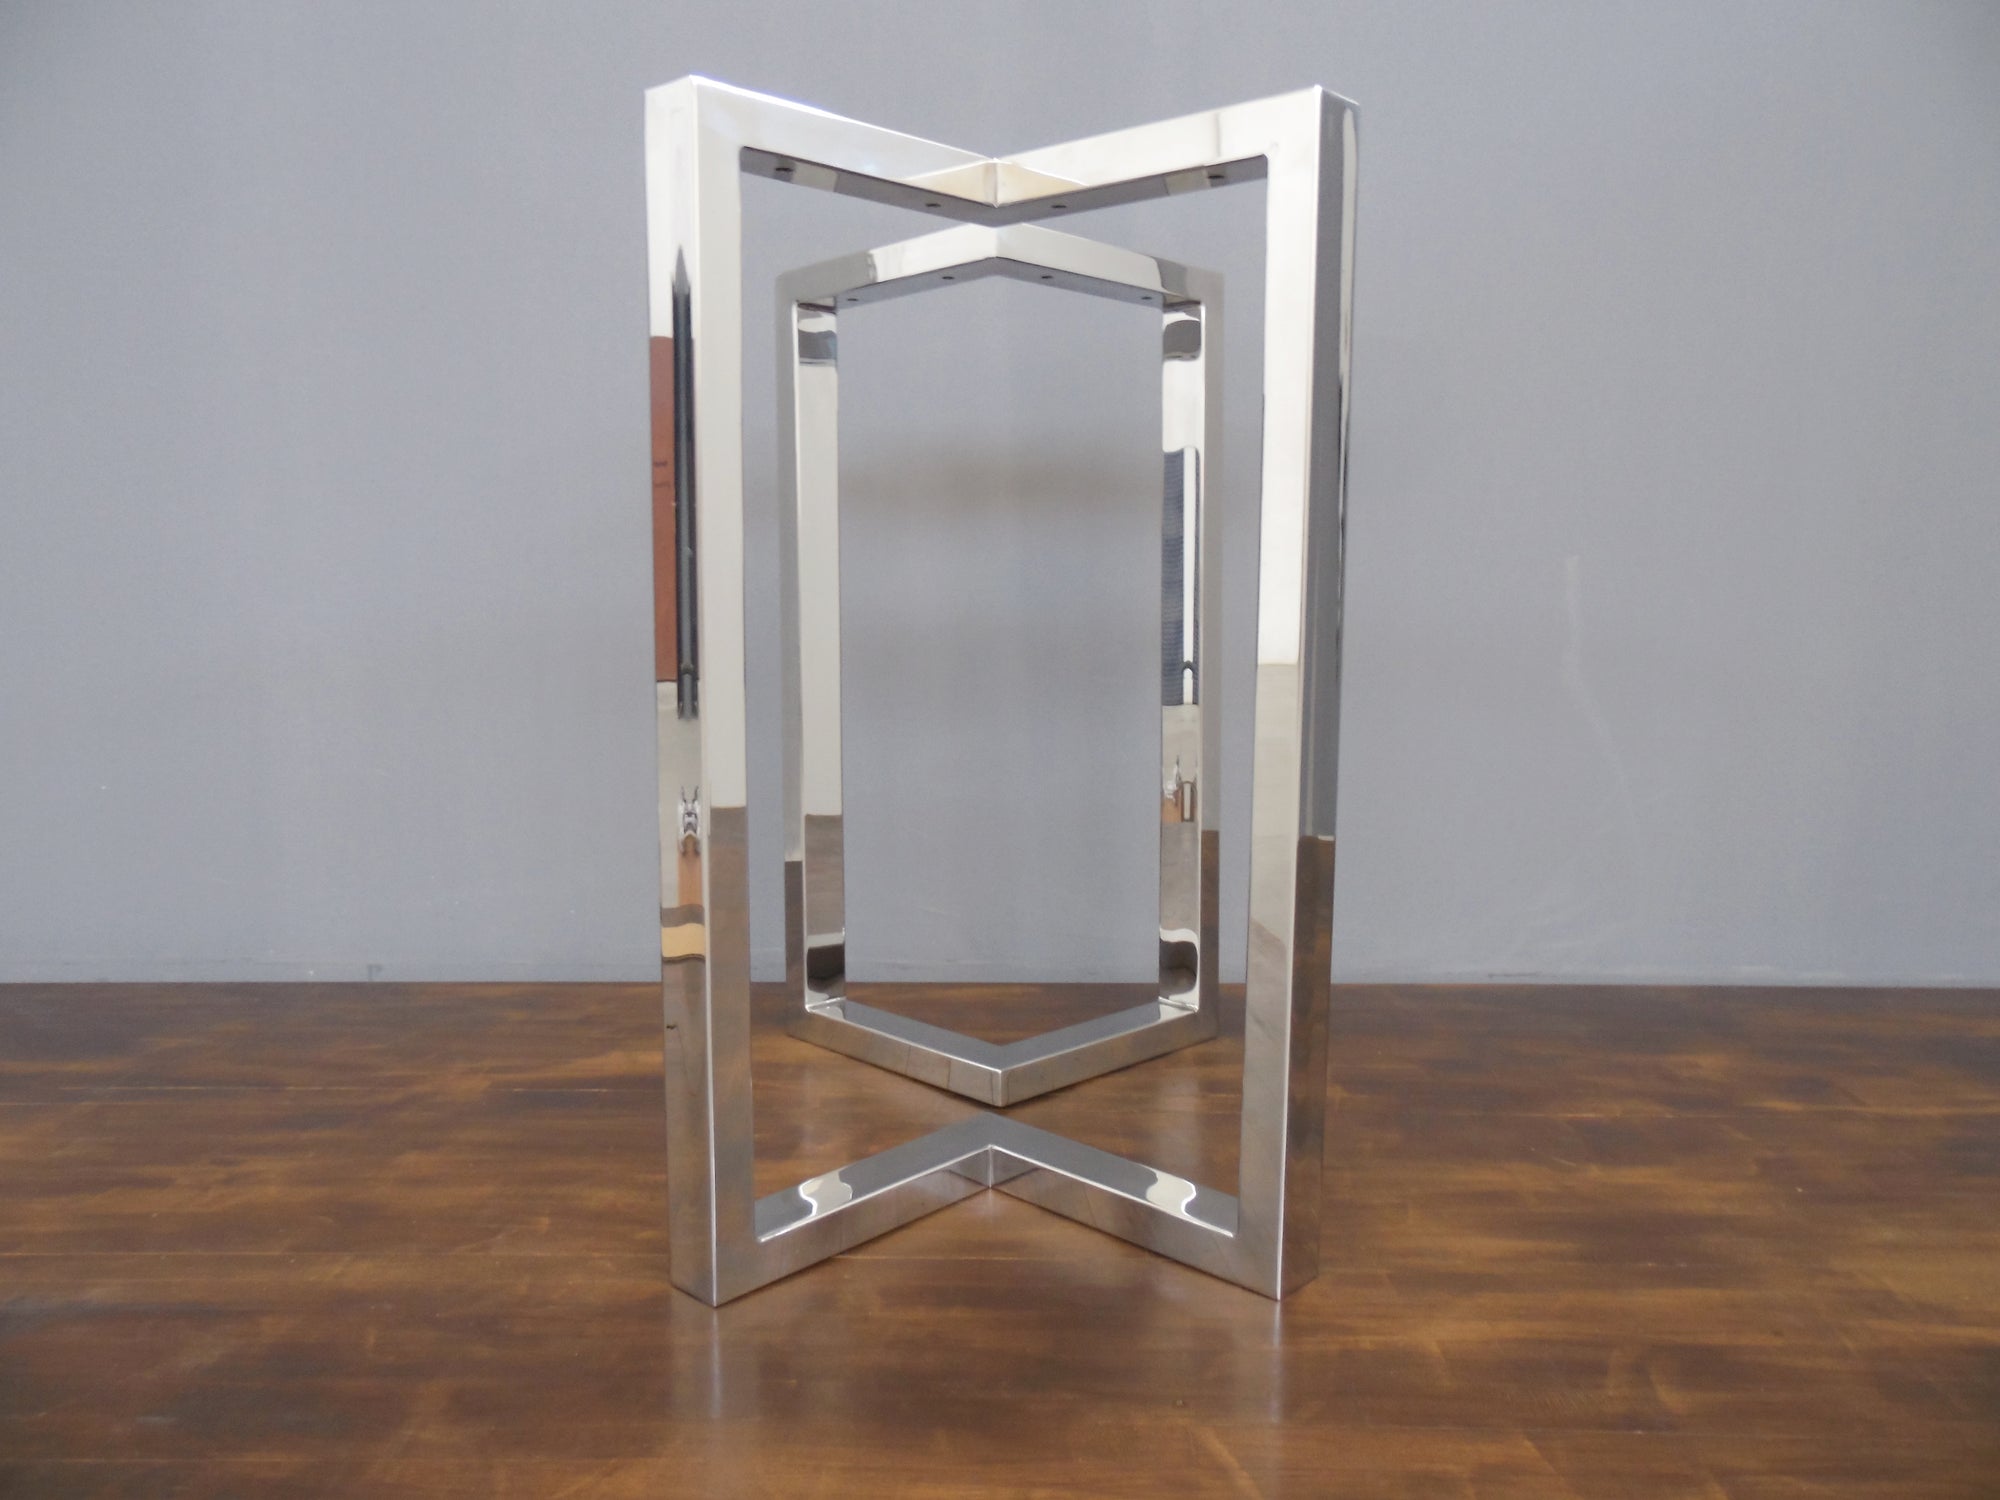 stainless steel bracket table legs for dining table legs